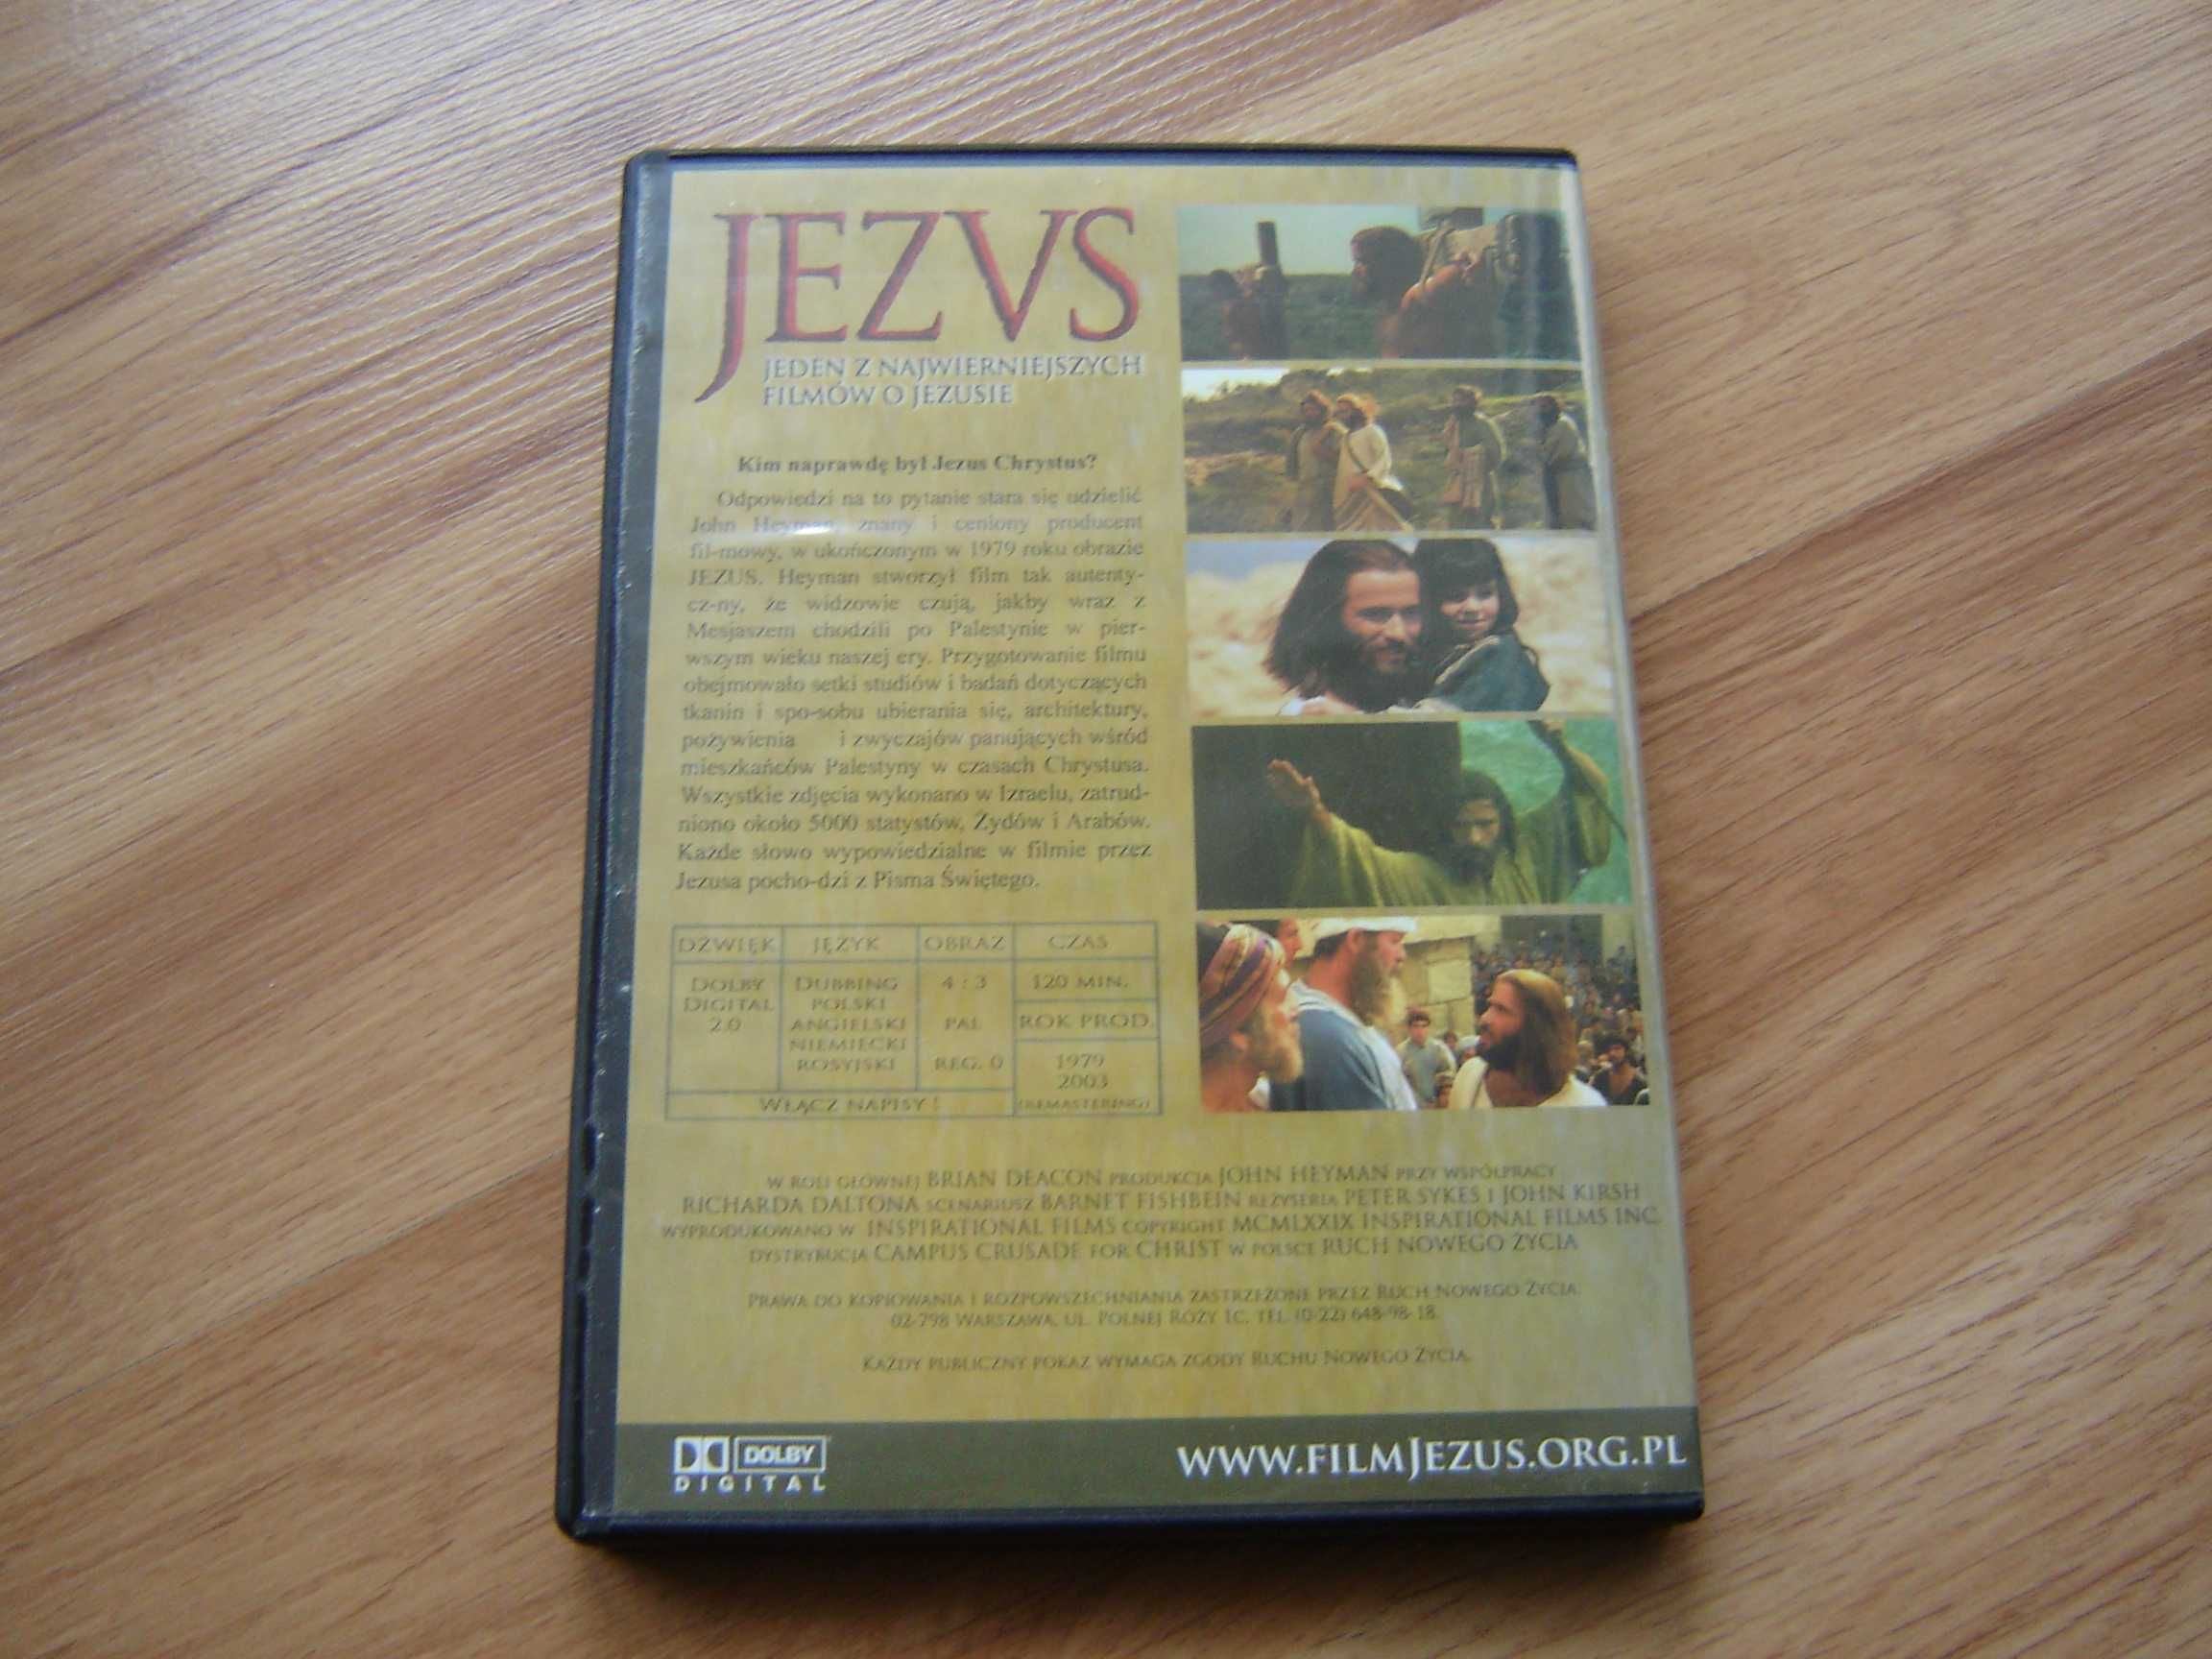 Film DVD "Jezus"